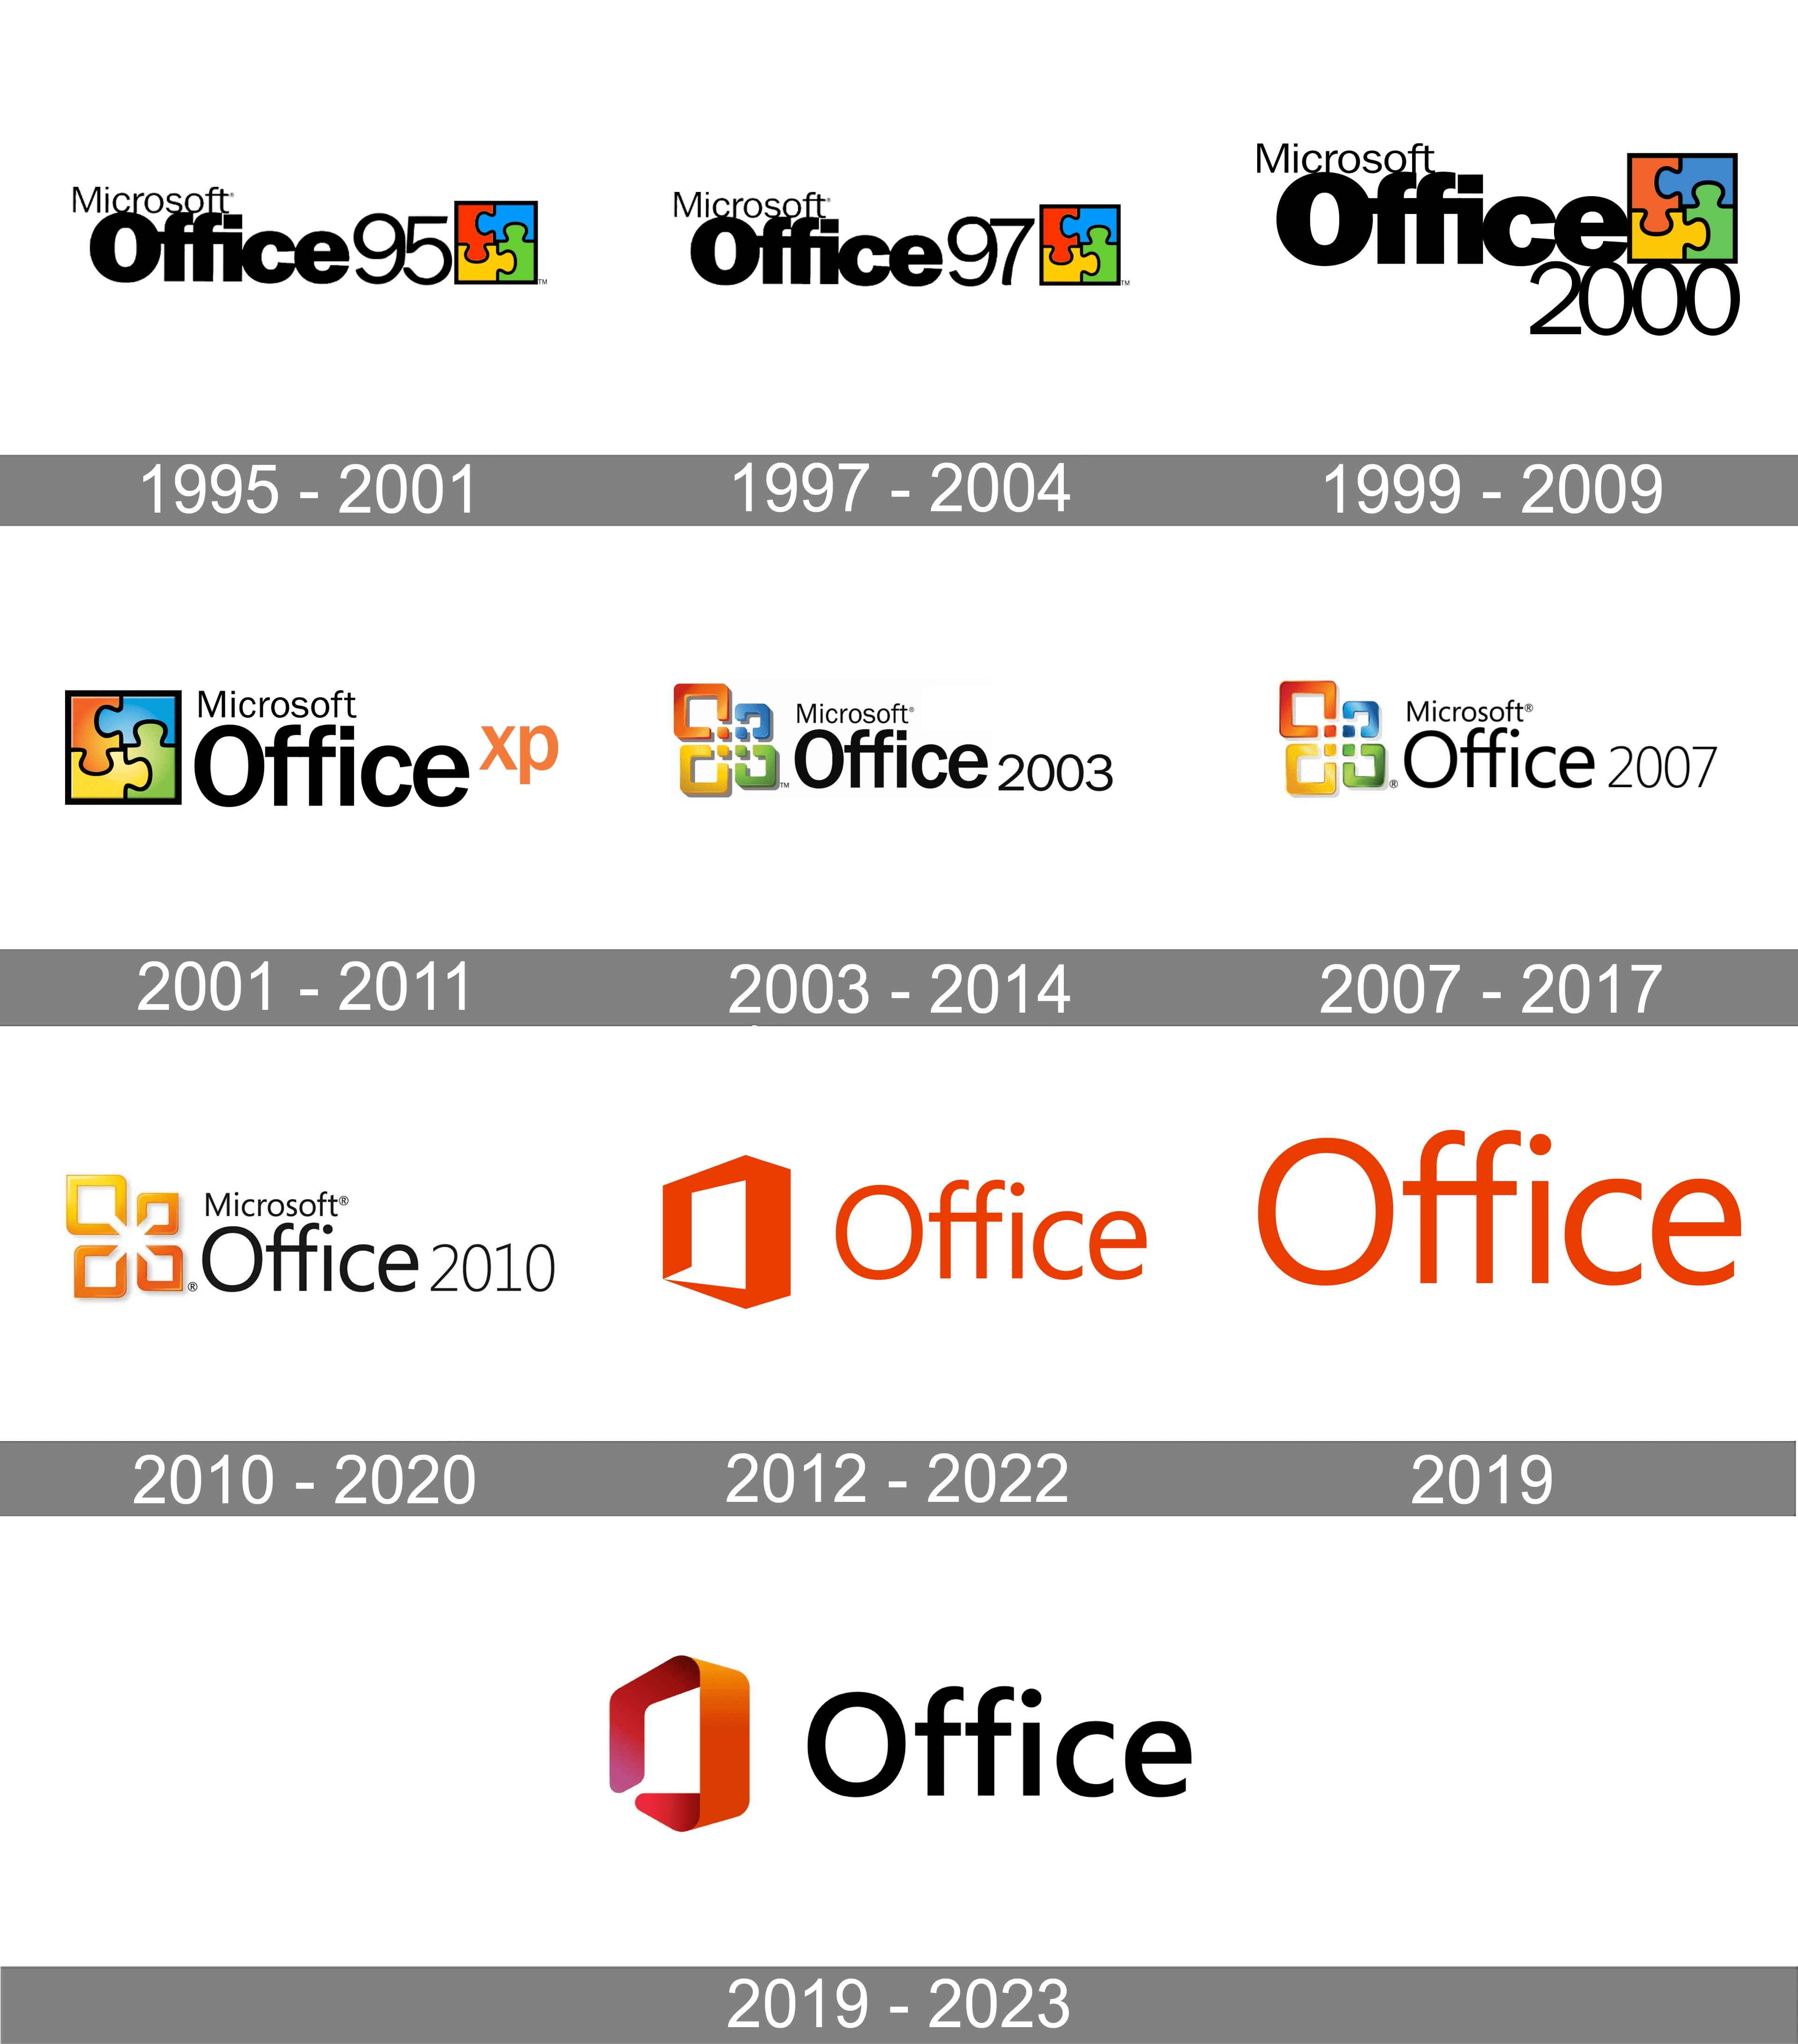 Download Microsoft Office 2016 Logo in SVG Vector or PNG File Format - Logo .wine